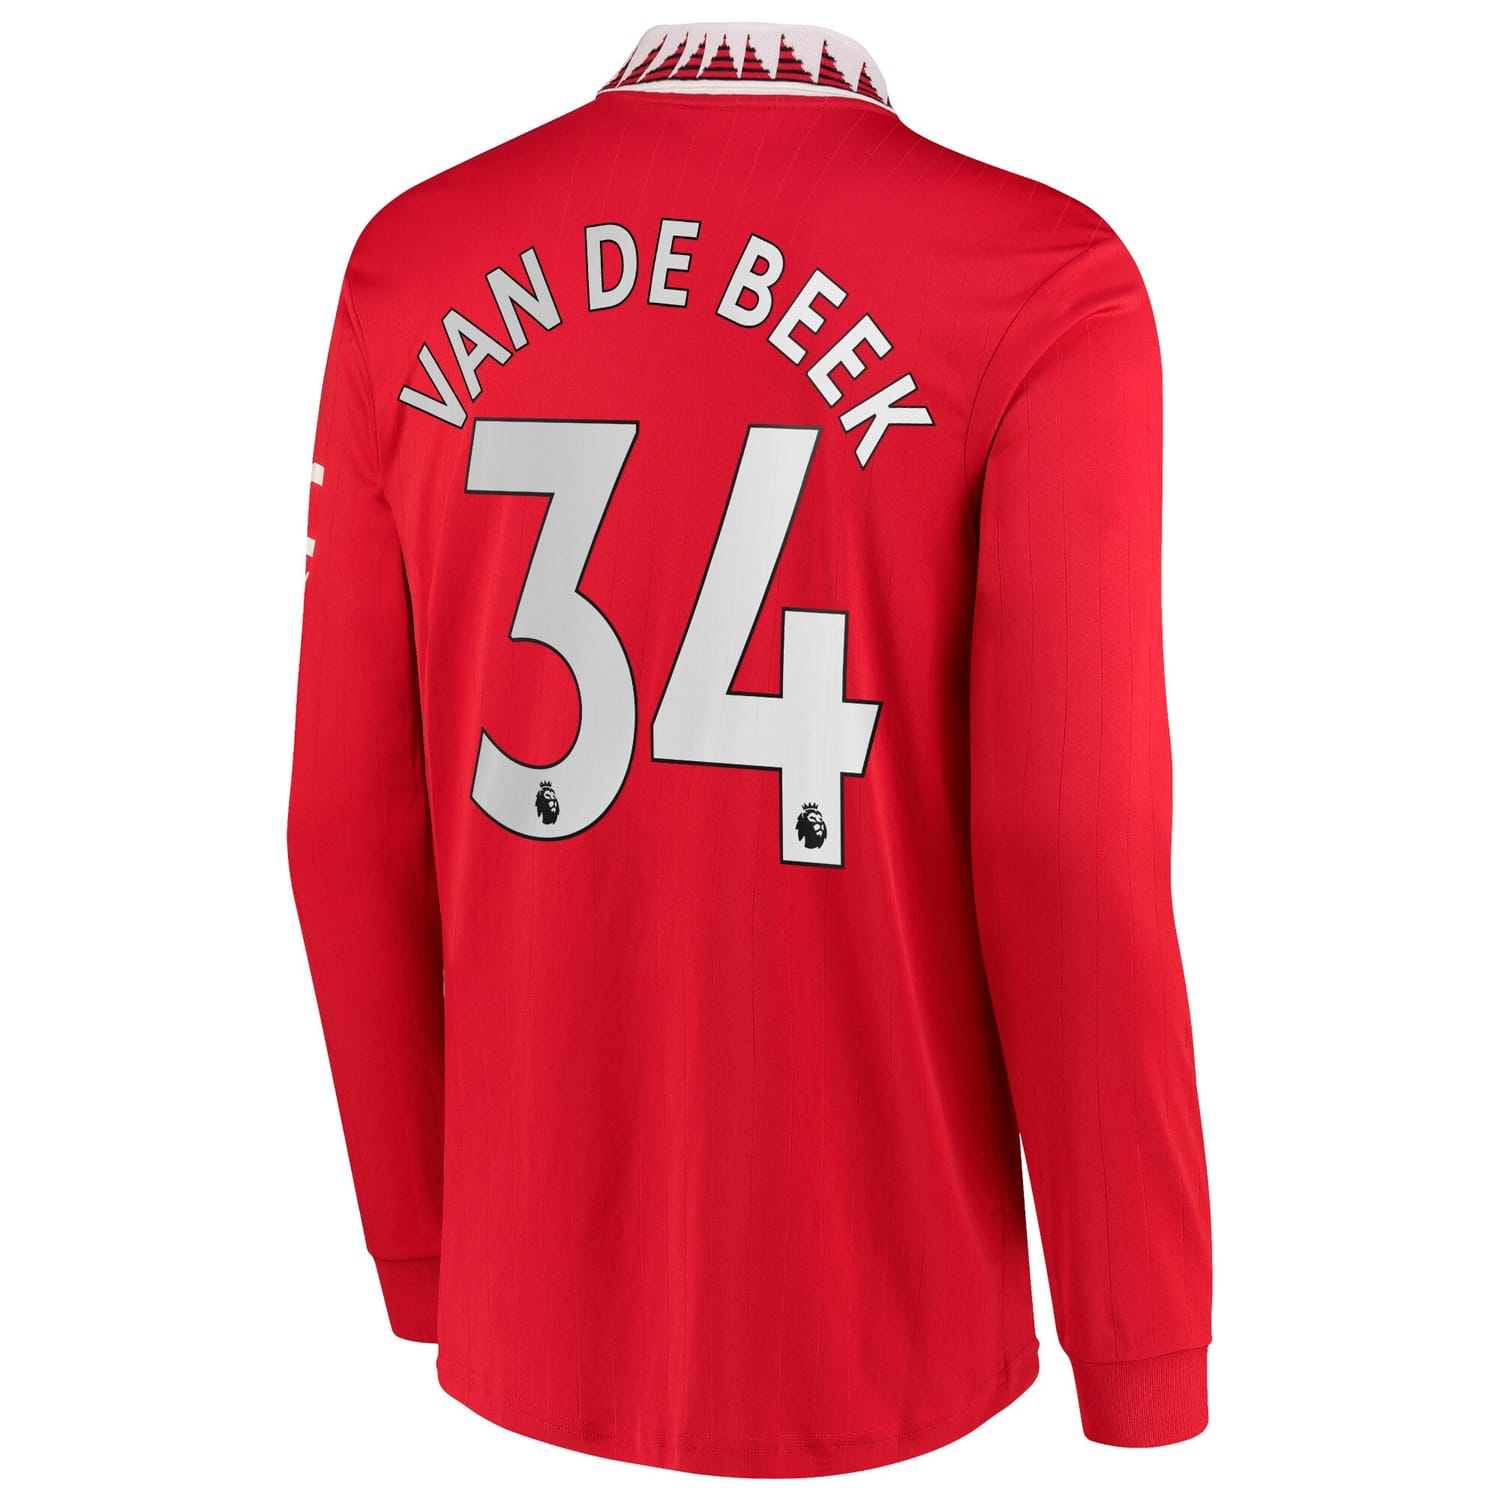 Premier League Manchester United Home Jersey Shirt Long Sleeve 2022-23 player Donny Van De Beek 34 printing for Men